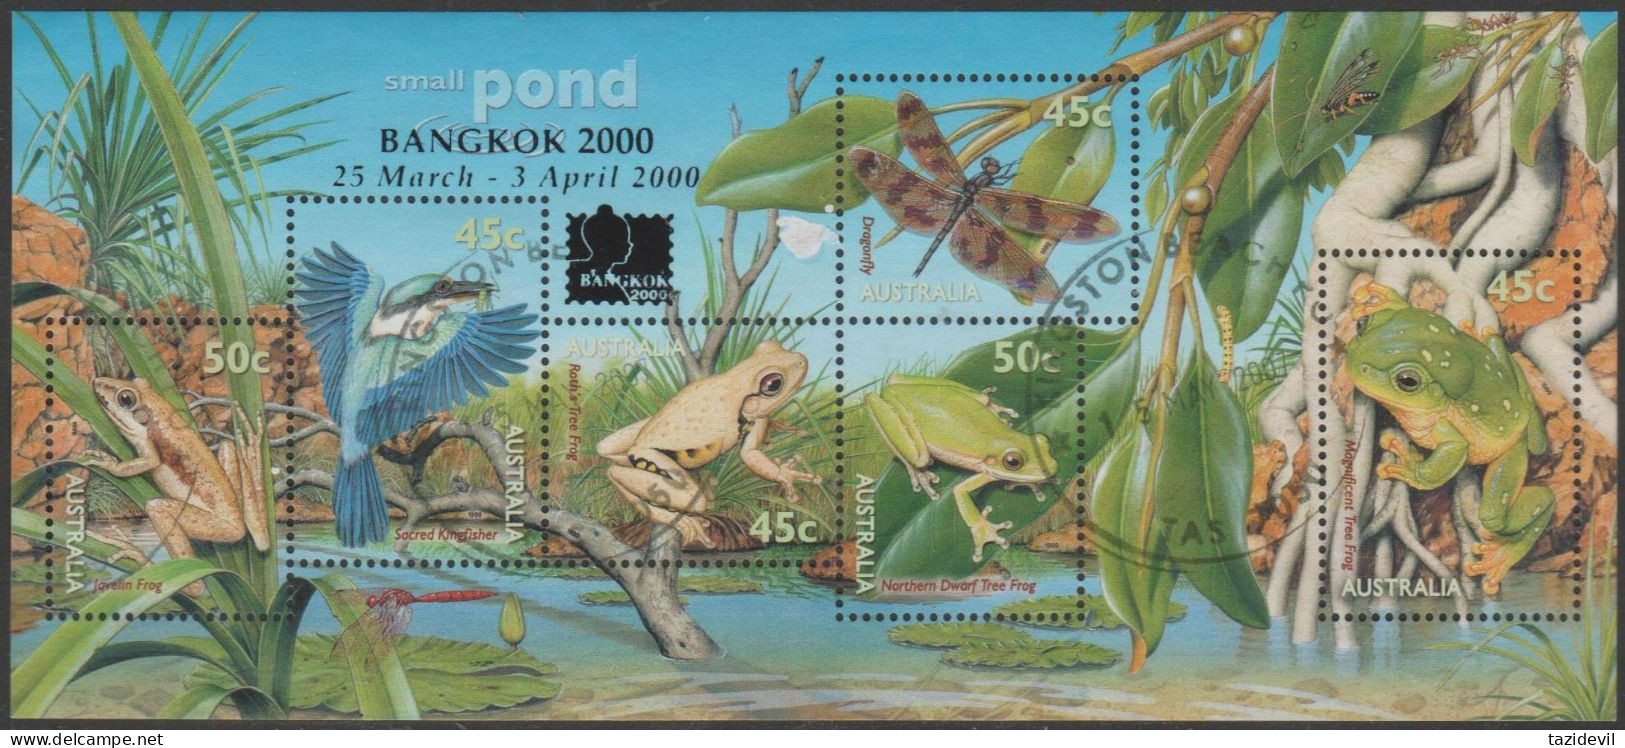 AUSTRALIA - USED - 1999 $2.80 Small Pond Souvenir Sheet Overprinted "Bangkok 2000" - Gebruikt